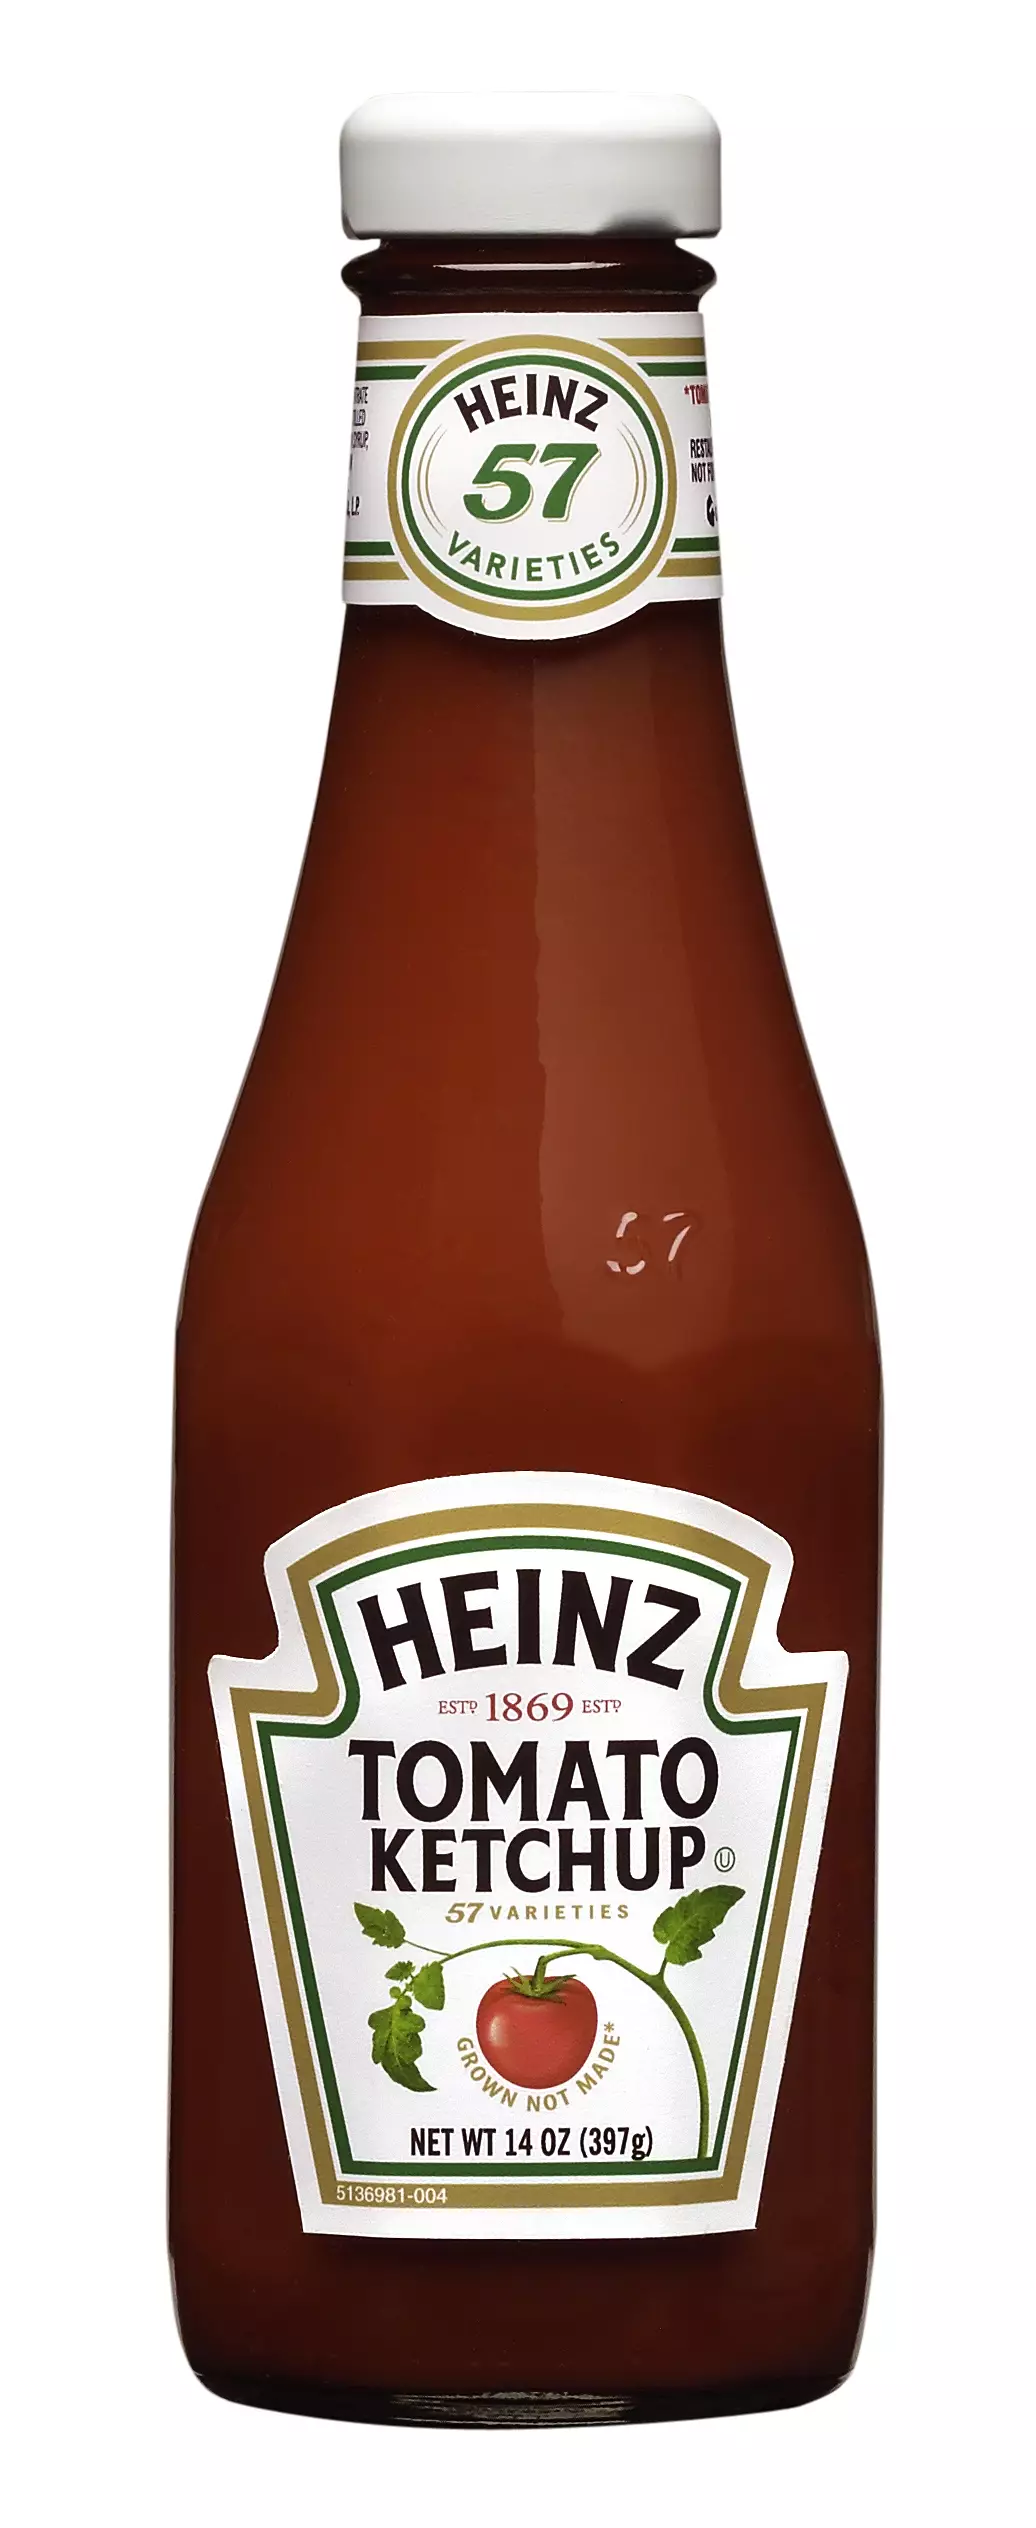 Kraft Heinz owns Heinz Tomato Ketchup.